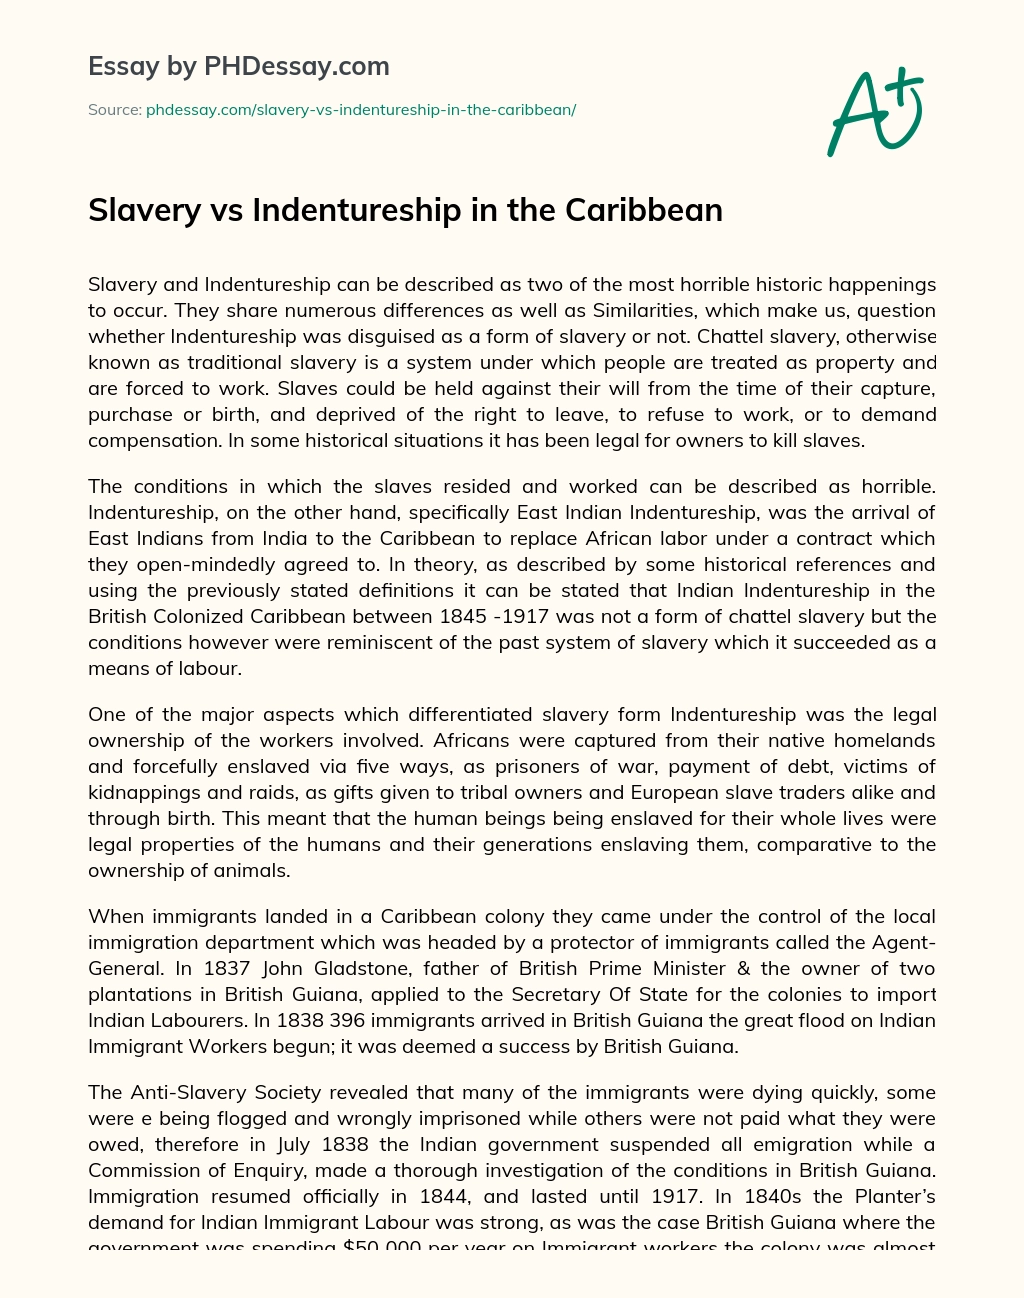 Slavery vs Indentureship in the Caribbean essay